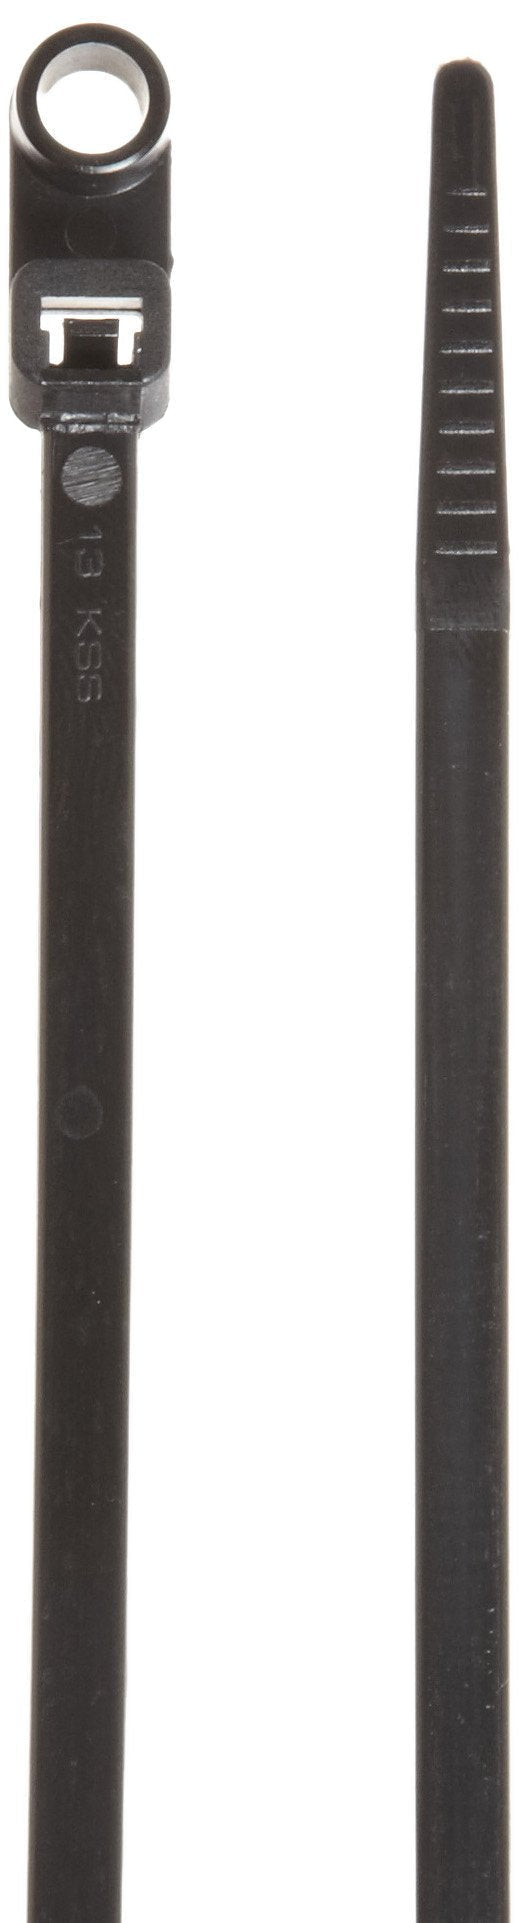  [AUSTRALIA] - Morris Products 20337 Mounting Nylon Cable Ties, 11-7/8" Length, 0.187" Width, 50lbs Tensile Strength, 3.35" Max Bundle Diameter (Pack of 100)